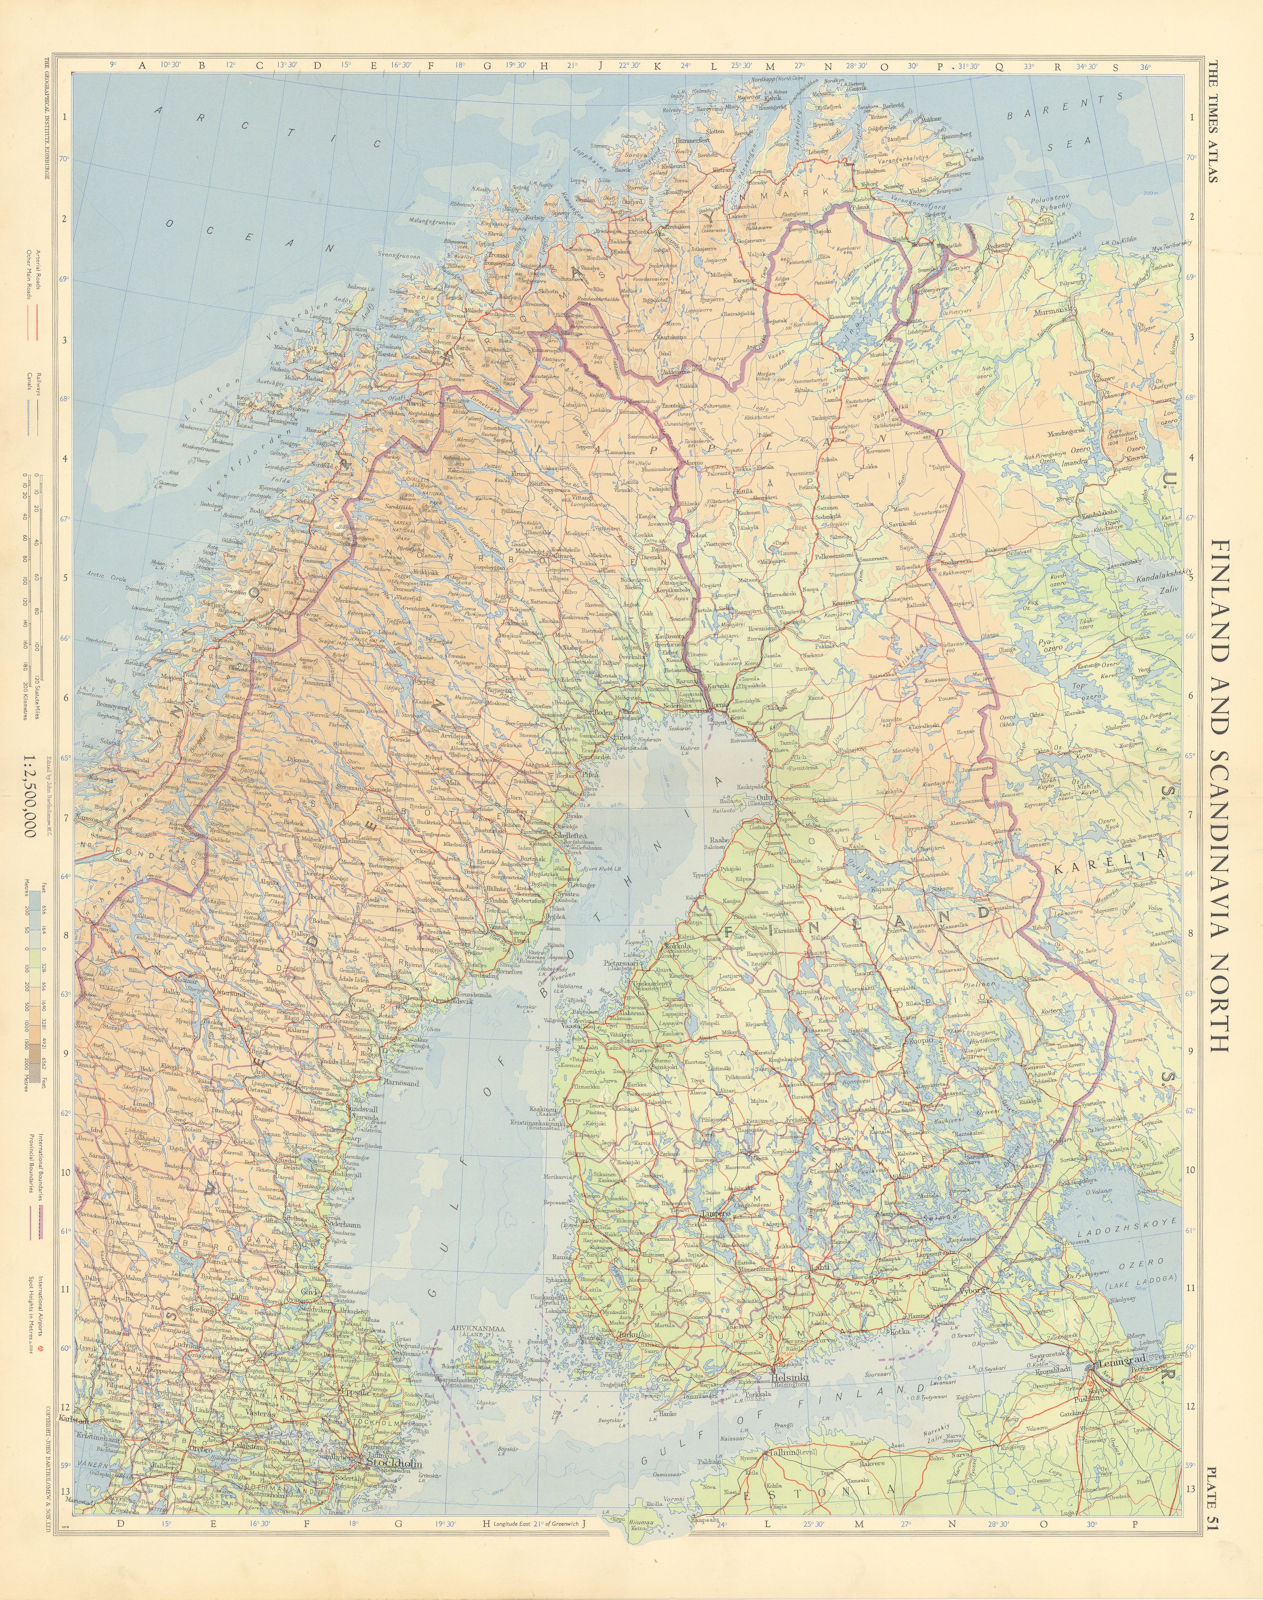 Finland & northern Scandinavia. Sweden & Norway. Gulf of Bothnia. TIMES 1955 map